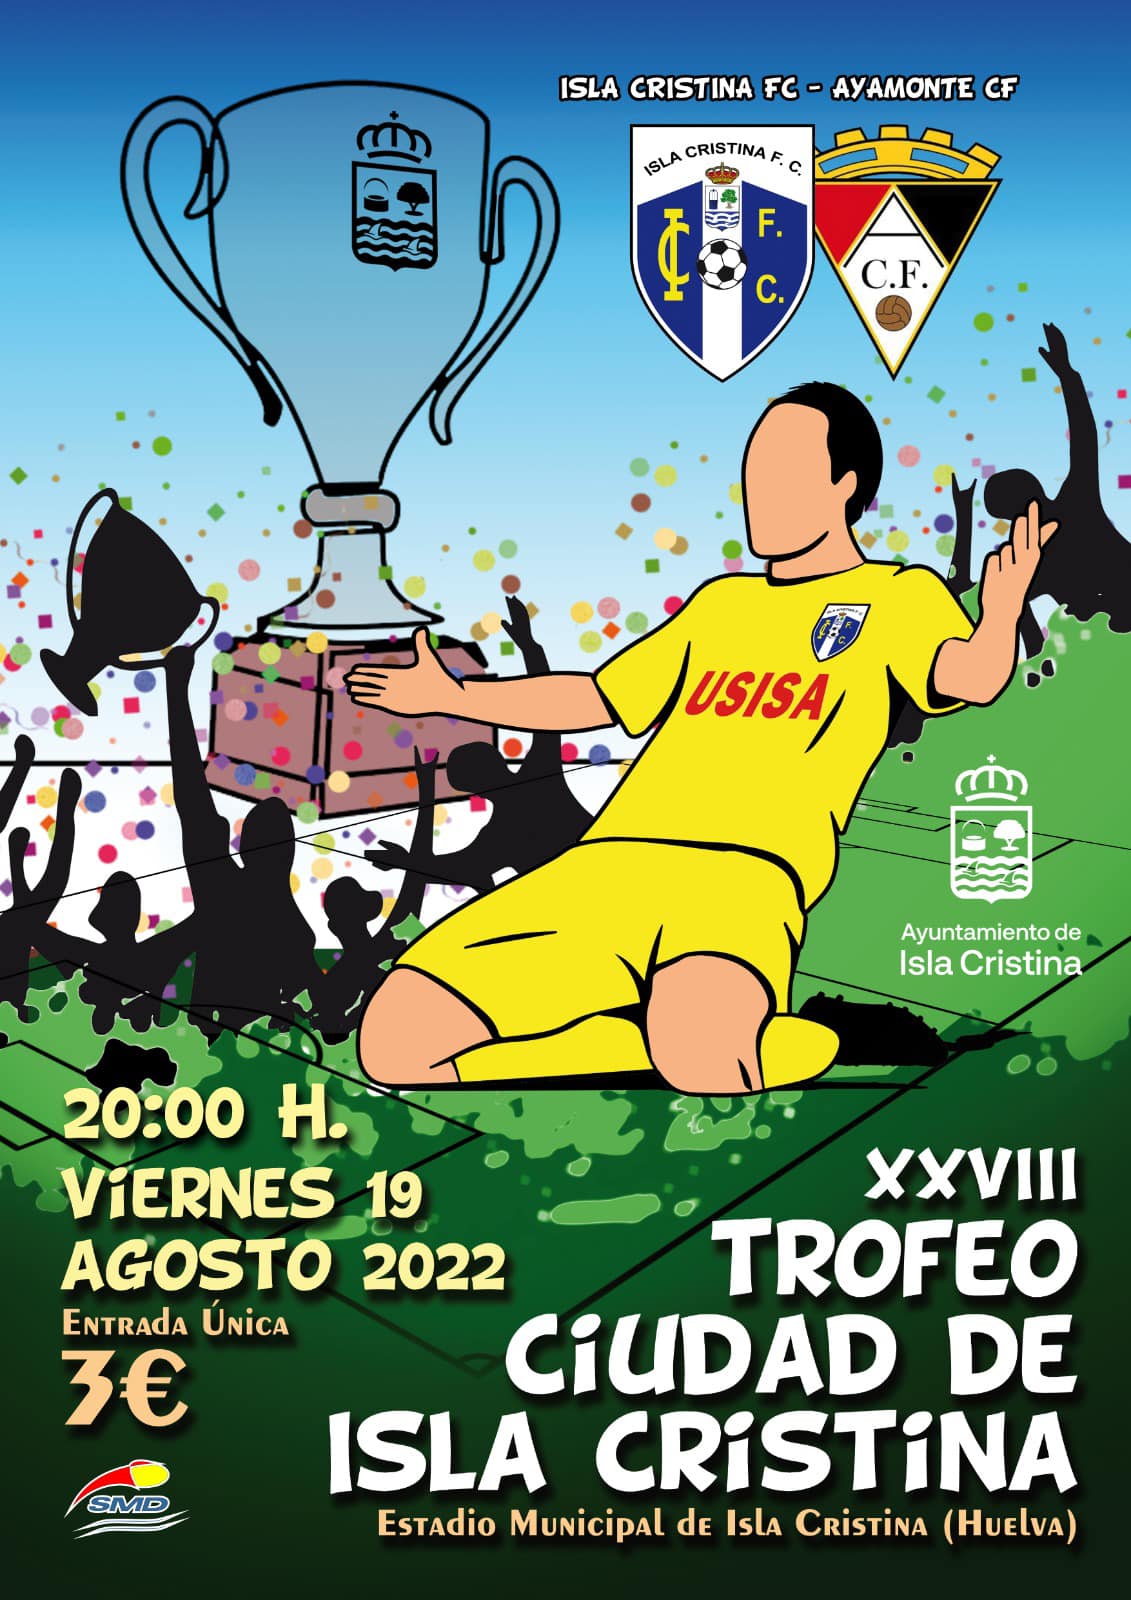 XXVIII Trofeo Ciudad de Isla Cristina